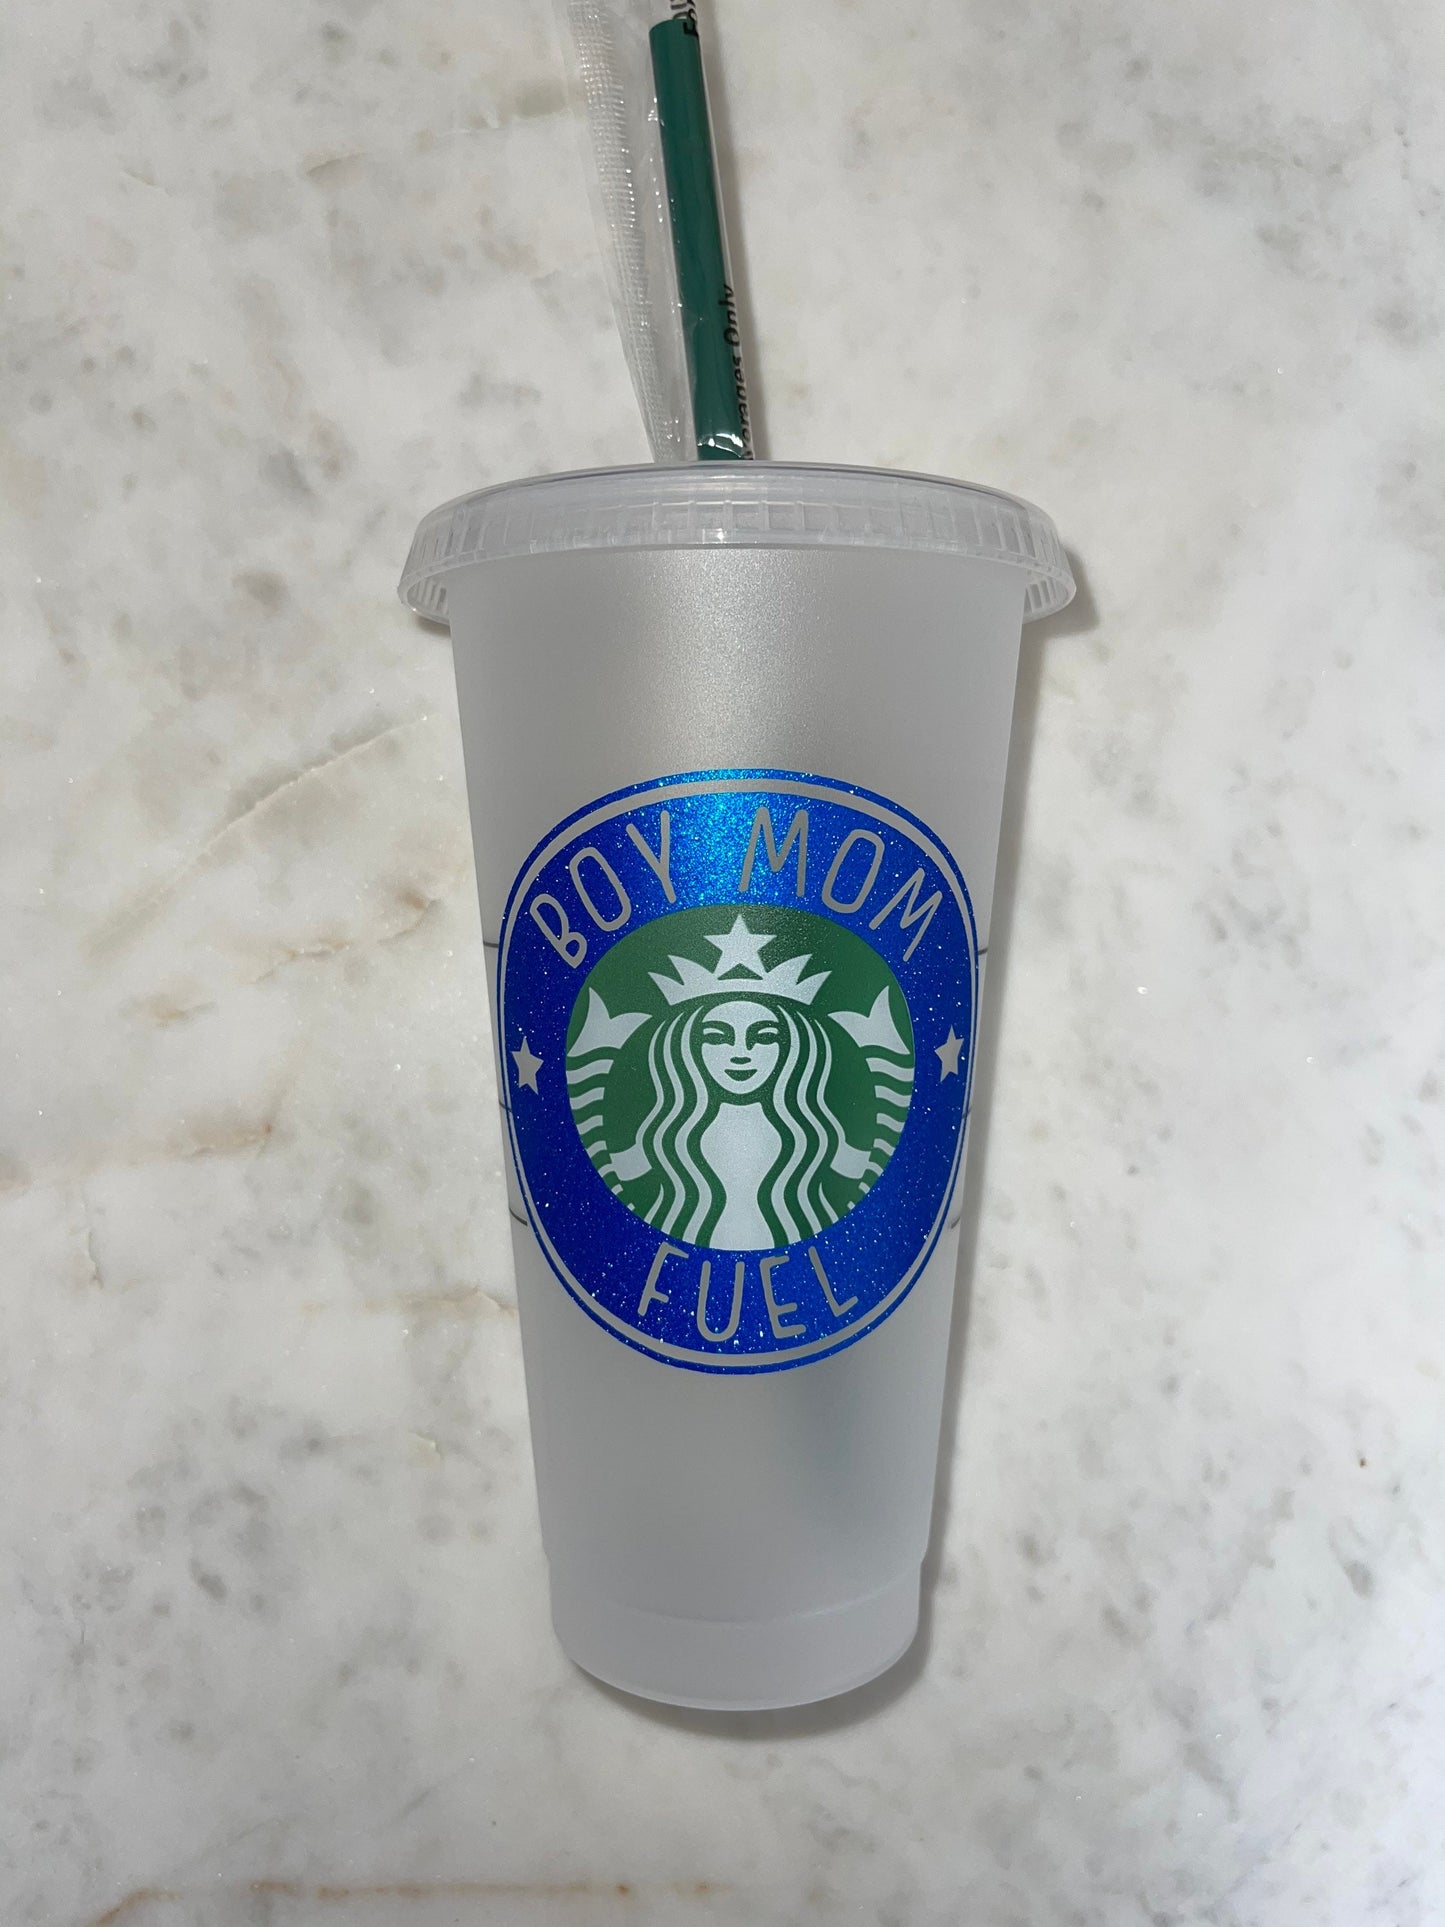 Boy Mom Fuel, Mom gift, Gift for mom, boy mom gift, Starbucks hot cup, boy mom starbucks cup